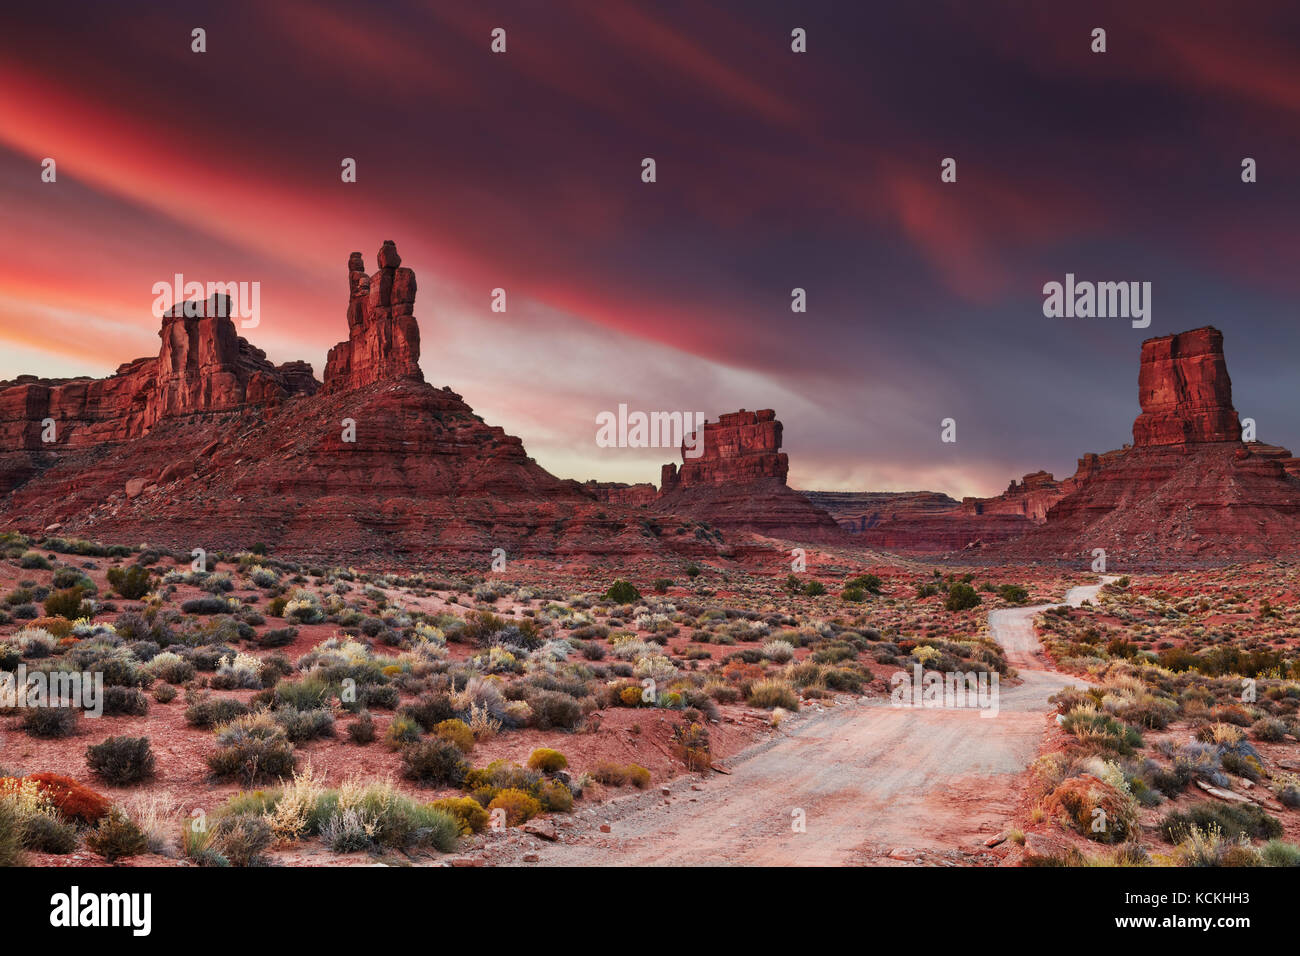 La Valle degli Dèi al tramonto, Utah, Stati Uniti d'America Foto Stock